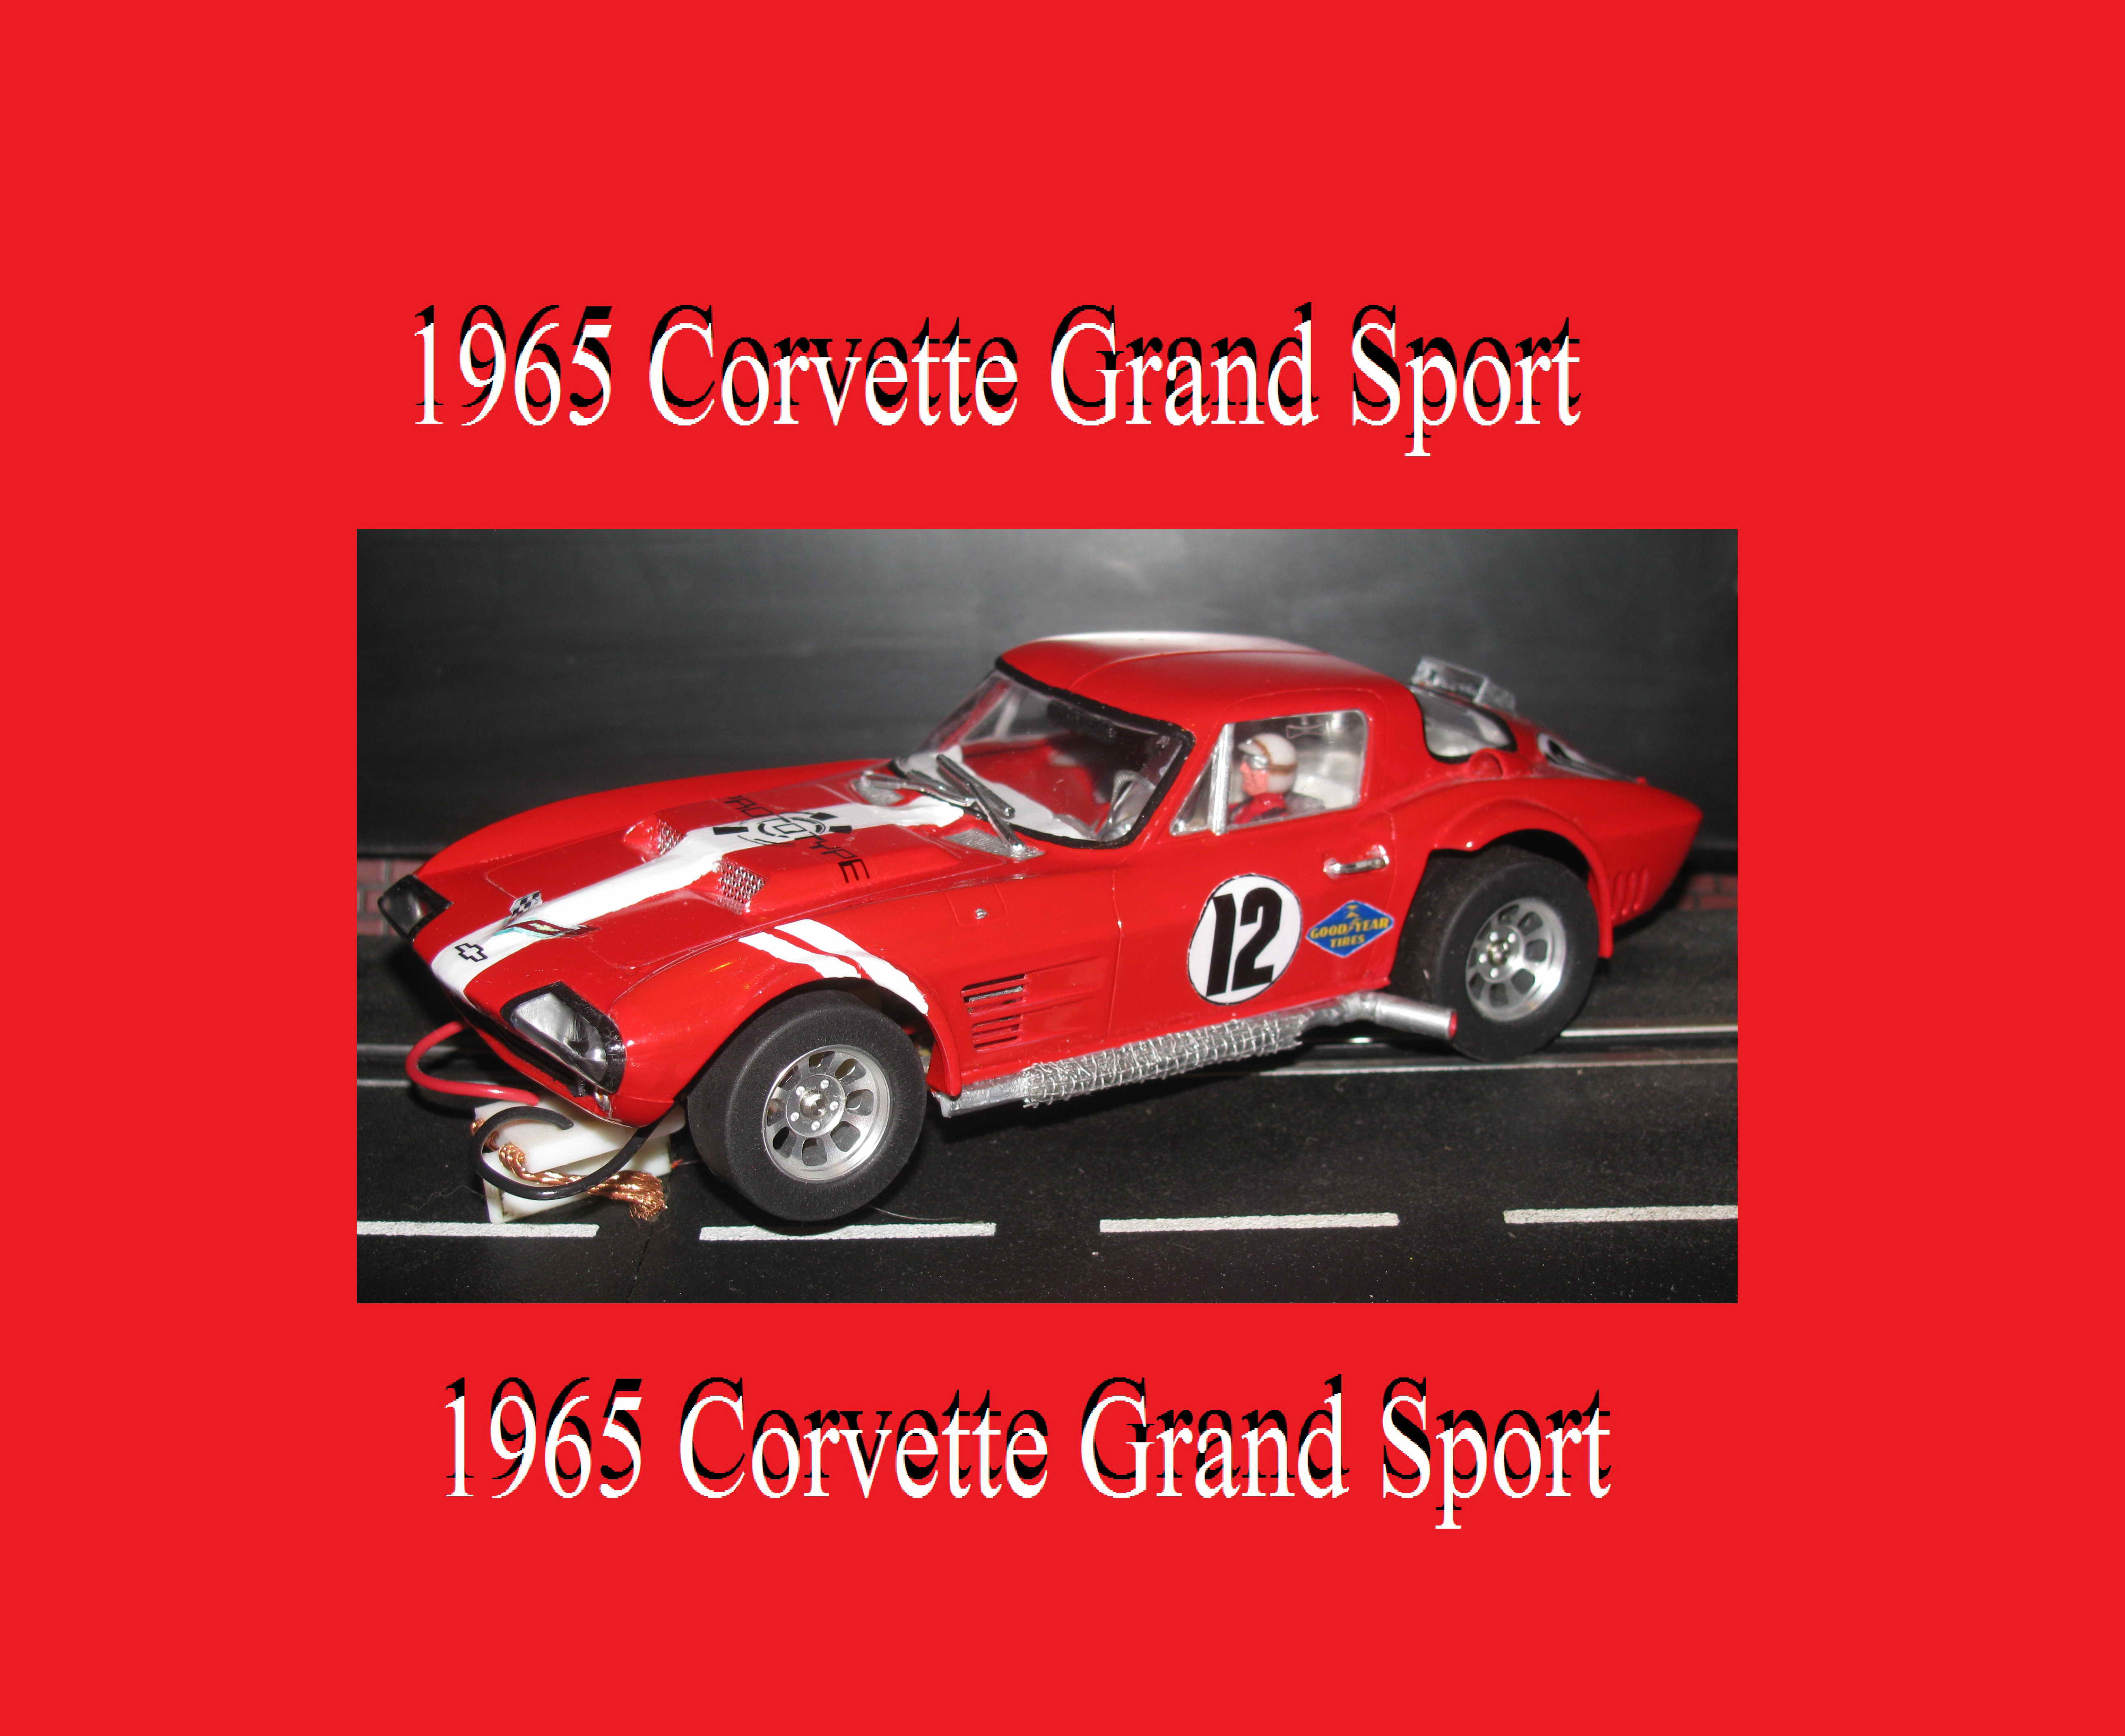 *SOLD* * FOR harle1710 ONLY (United Kingdom), Reg. $359.99, Sale. $279.99, One Time Special offer $250.00 * Vintage 1965 Corvette Grand Sport slot car 1/24 scale